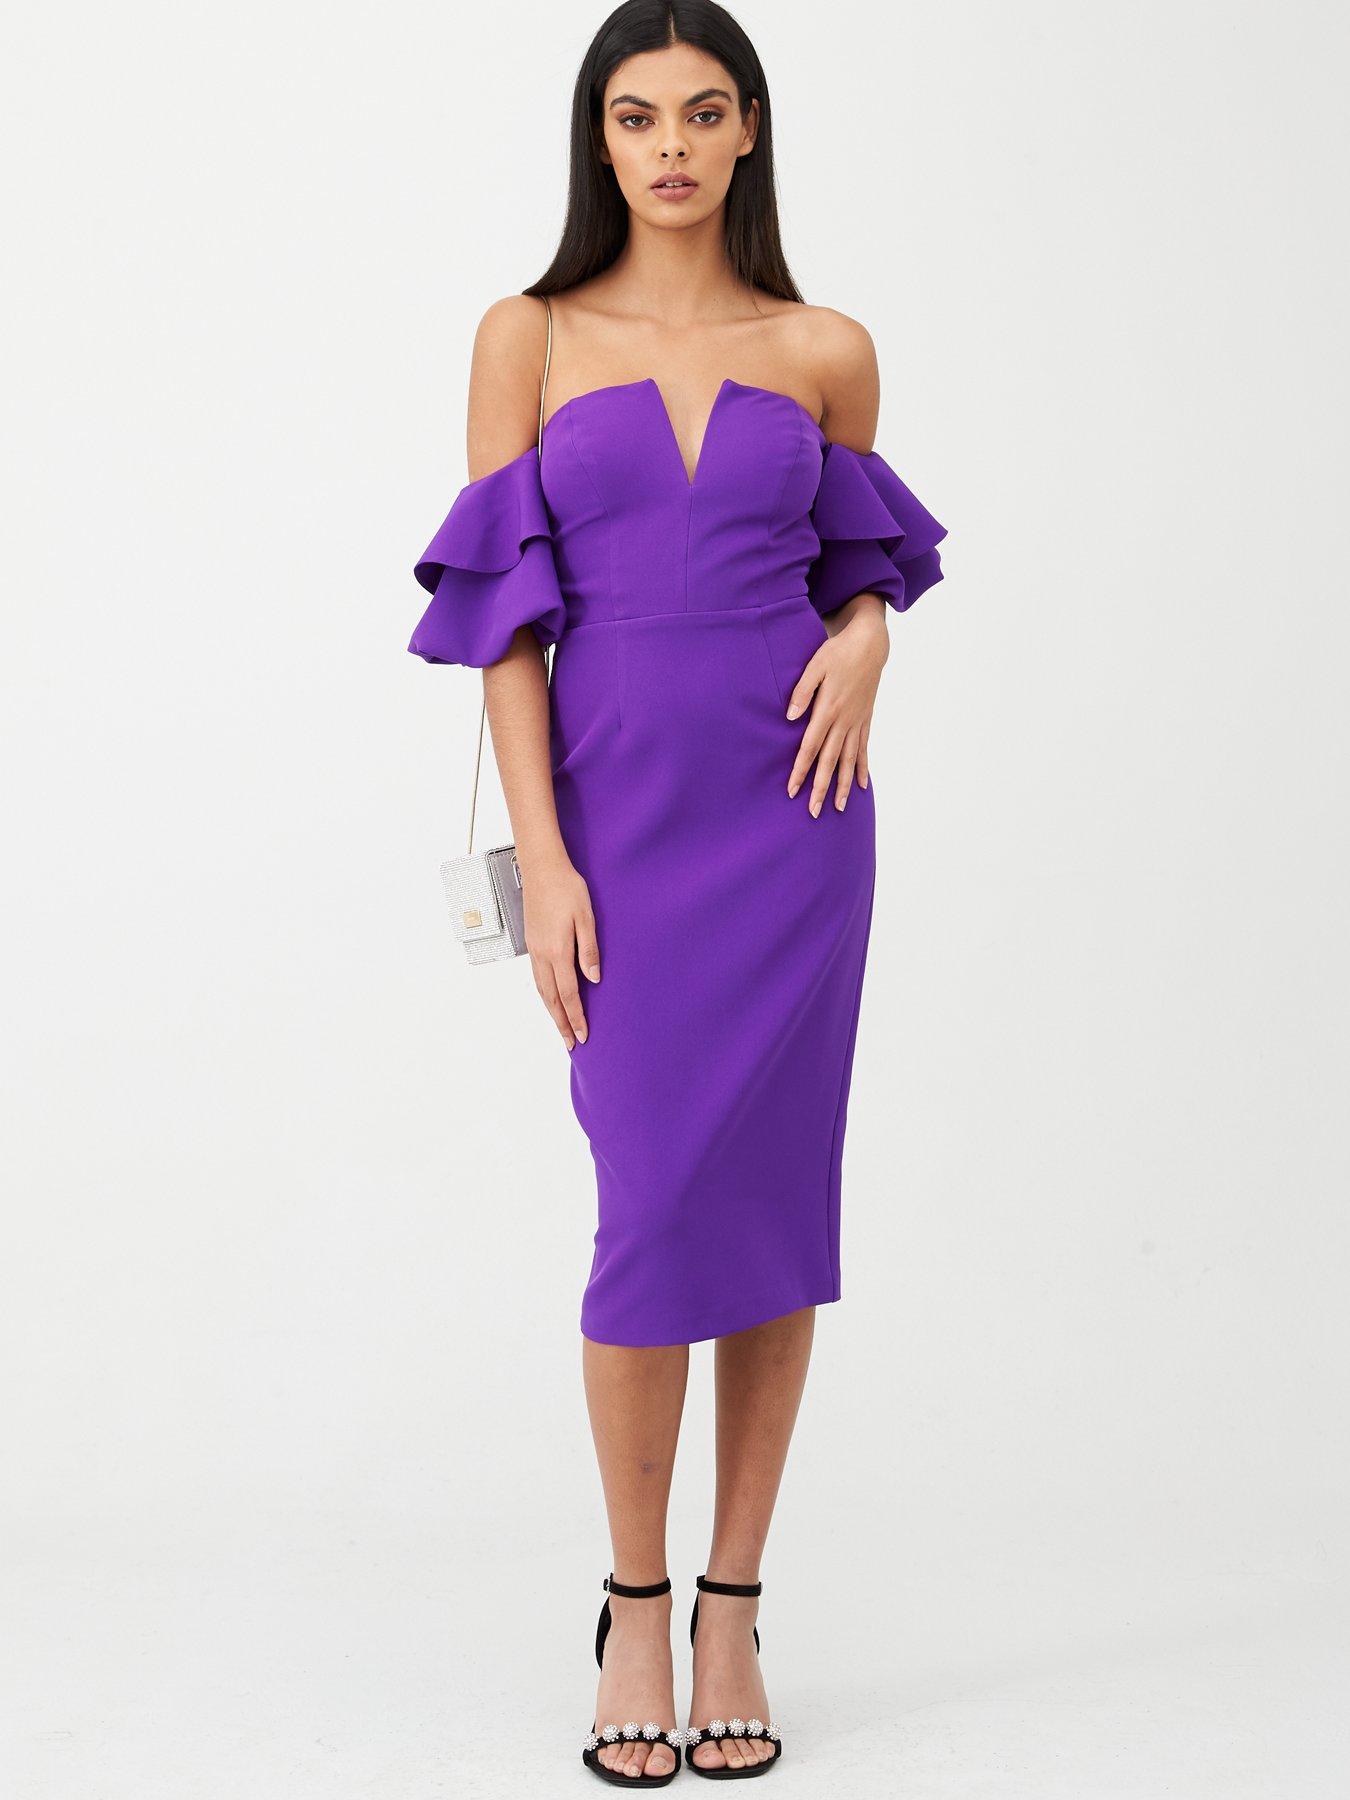 river island purple dress